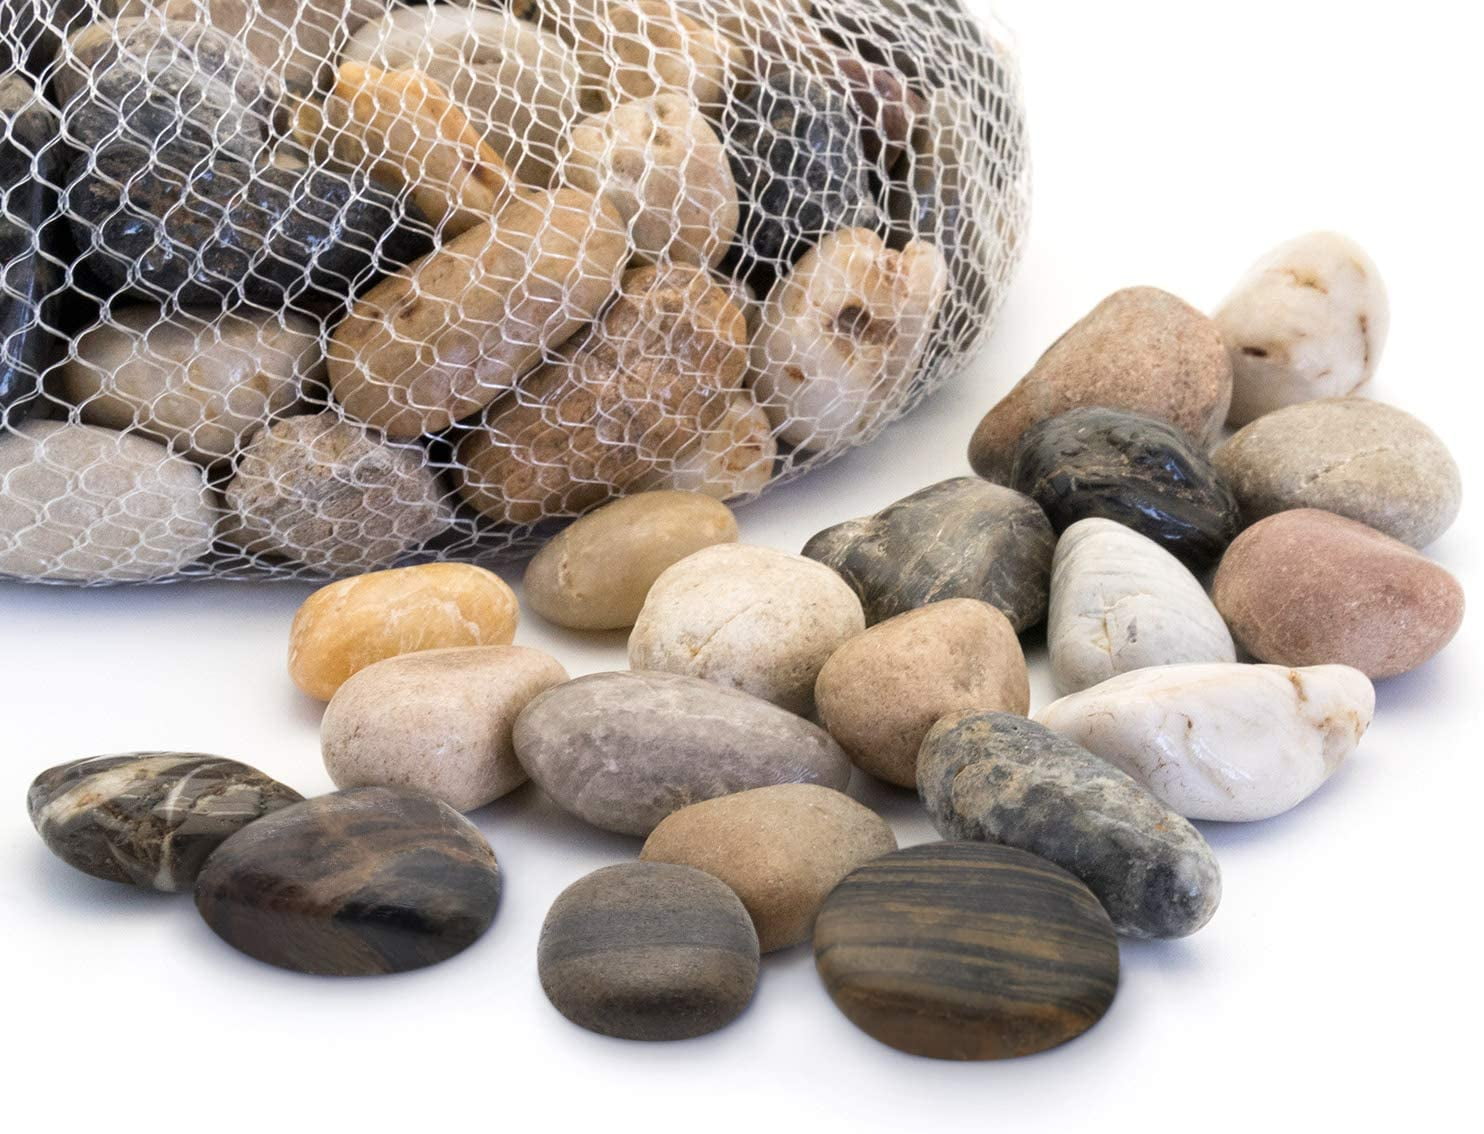 Natural Large River Pebbles Stones Rocks Mixed Colour Water Plant Decor 